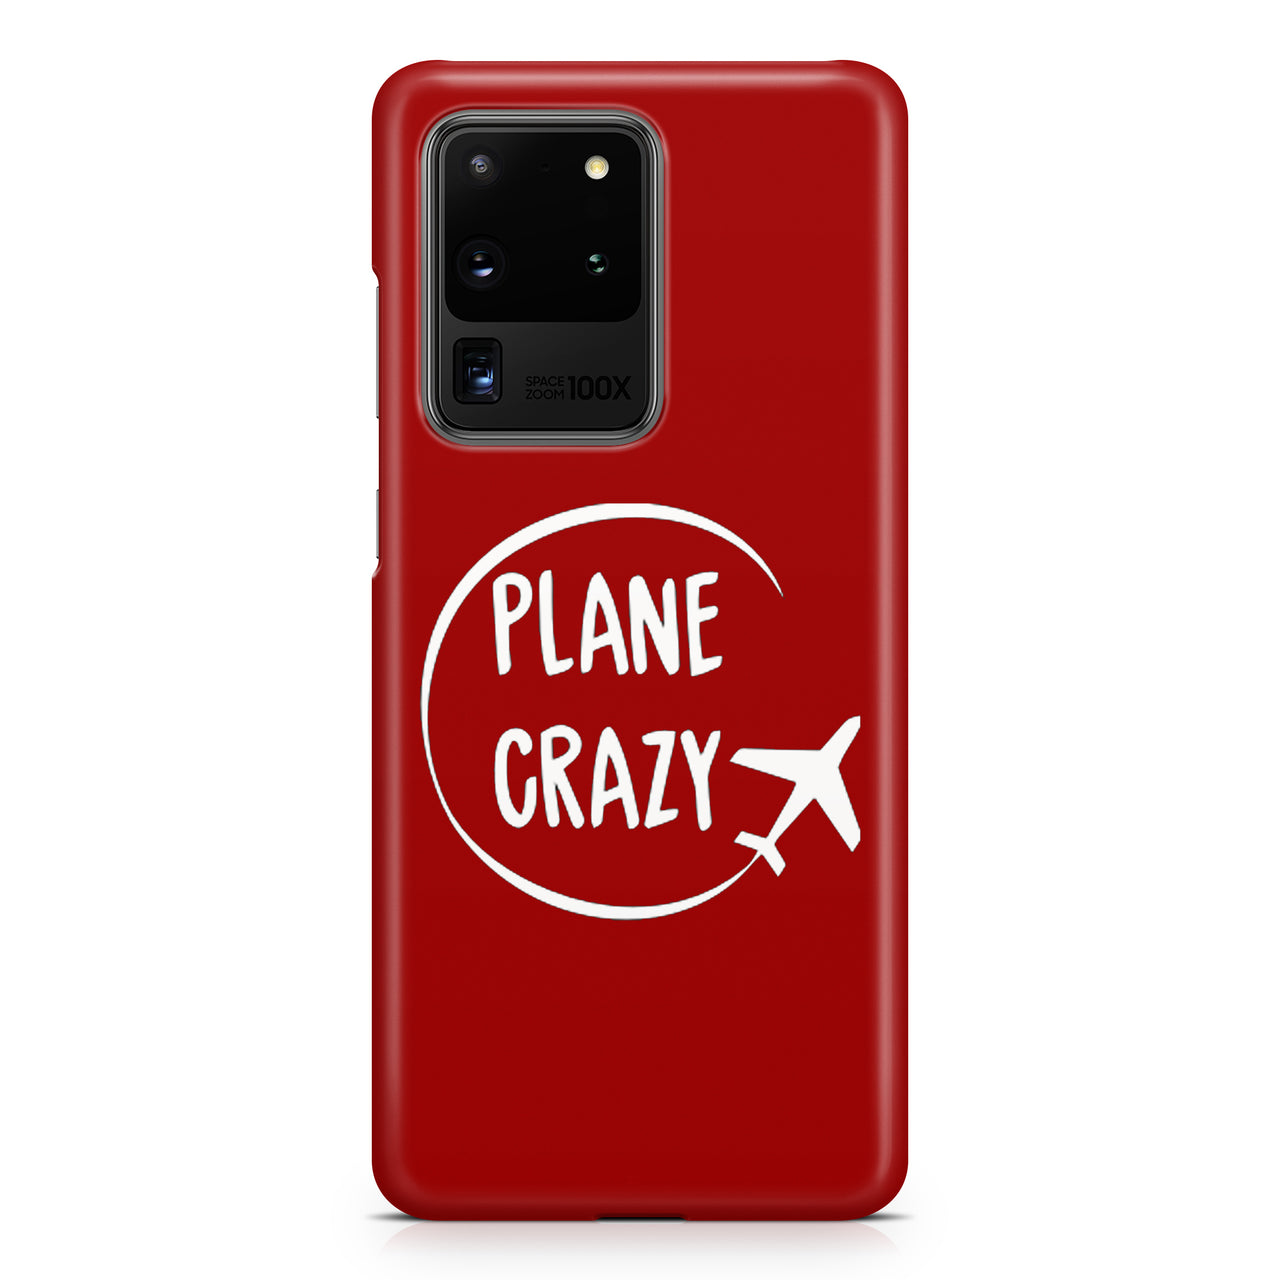 Plane Crazy Samsung S & Note Cases